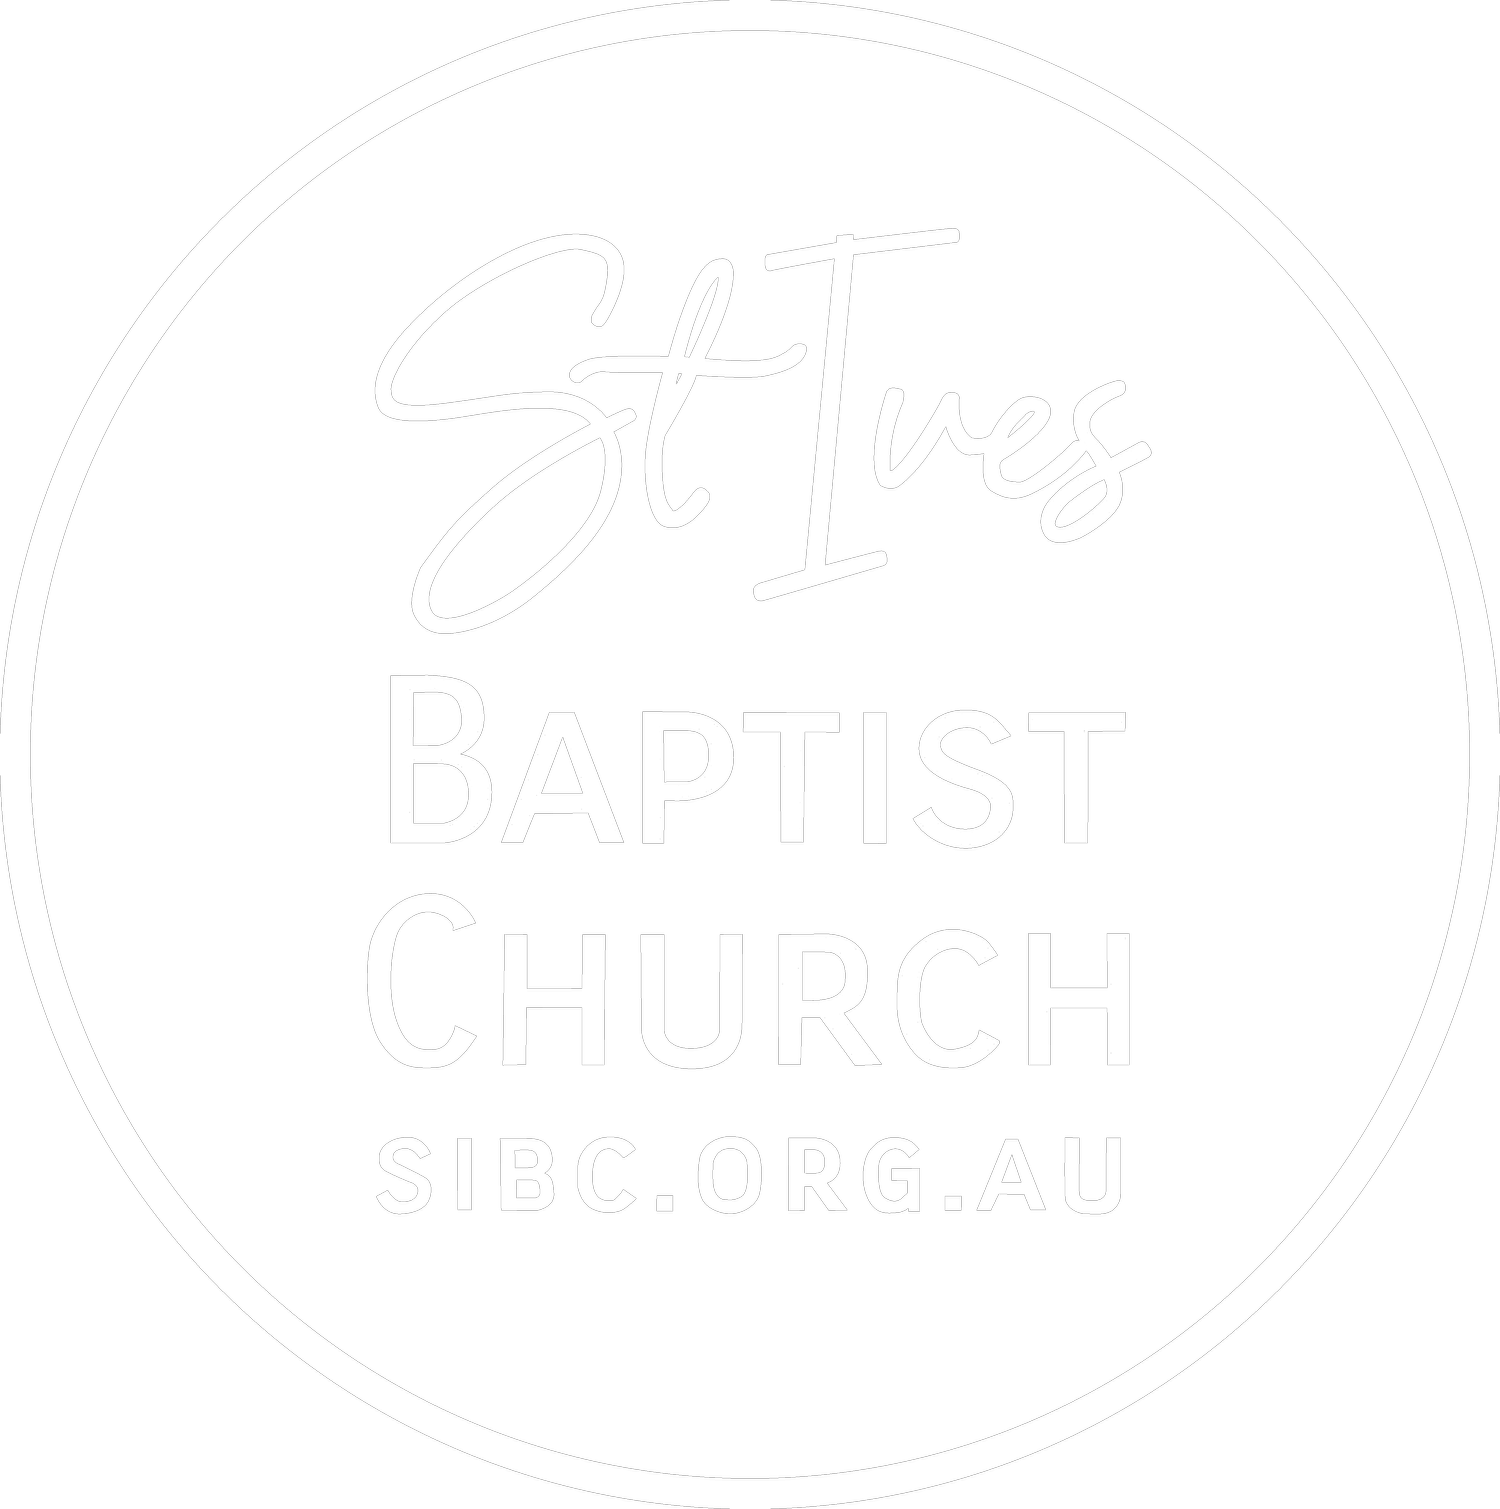 St. Ives Baptist Church